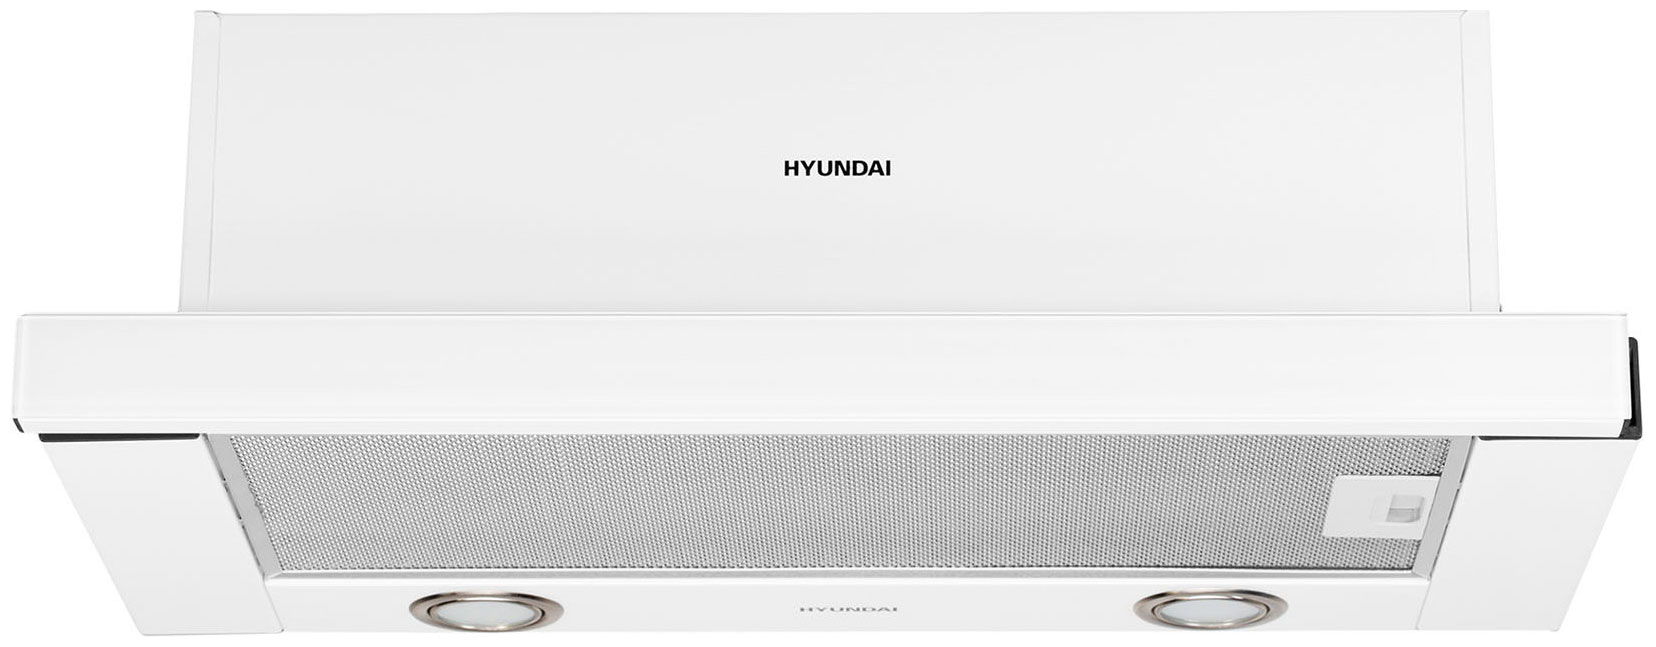 Вытяжка Hyundai HBH 6236 WG белый встраиваемая вытяжка hyundai hbh 6236 wg